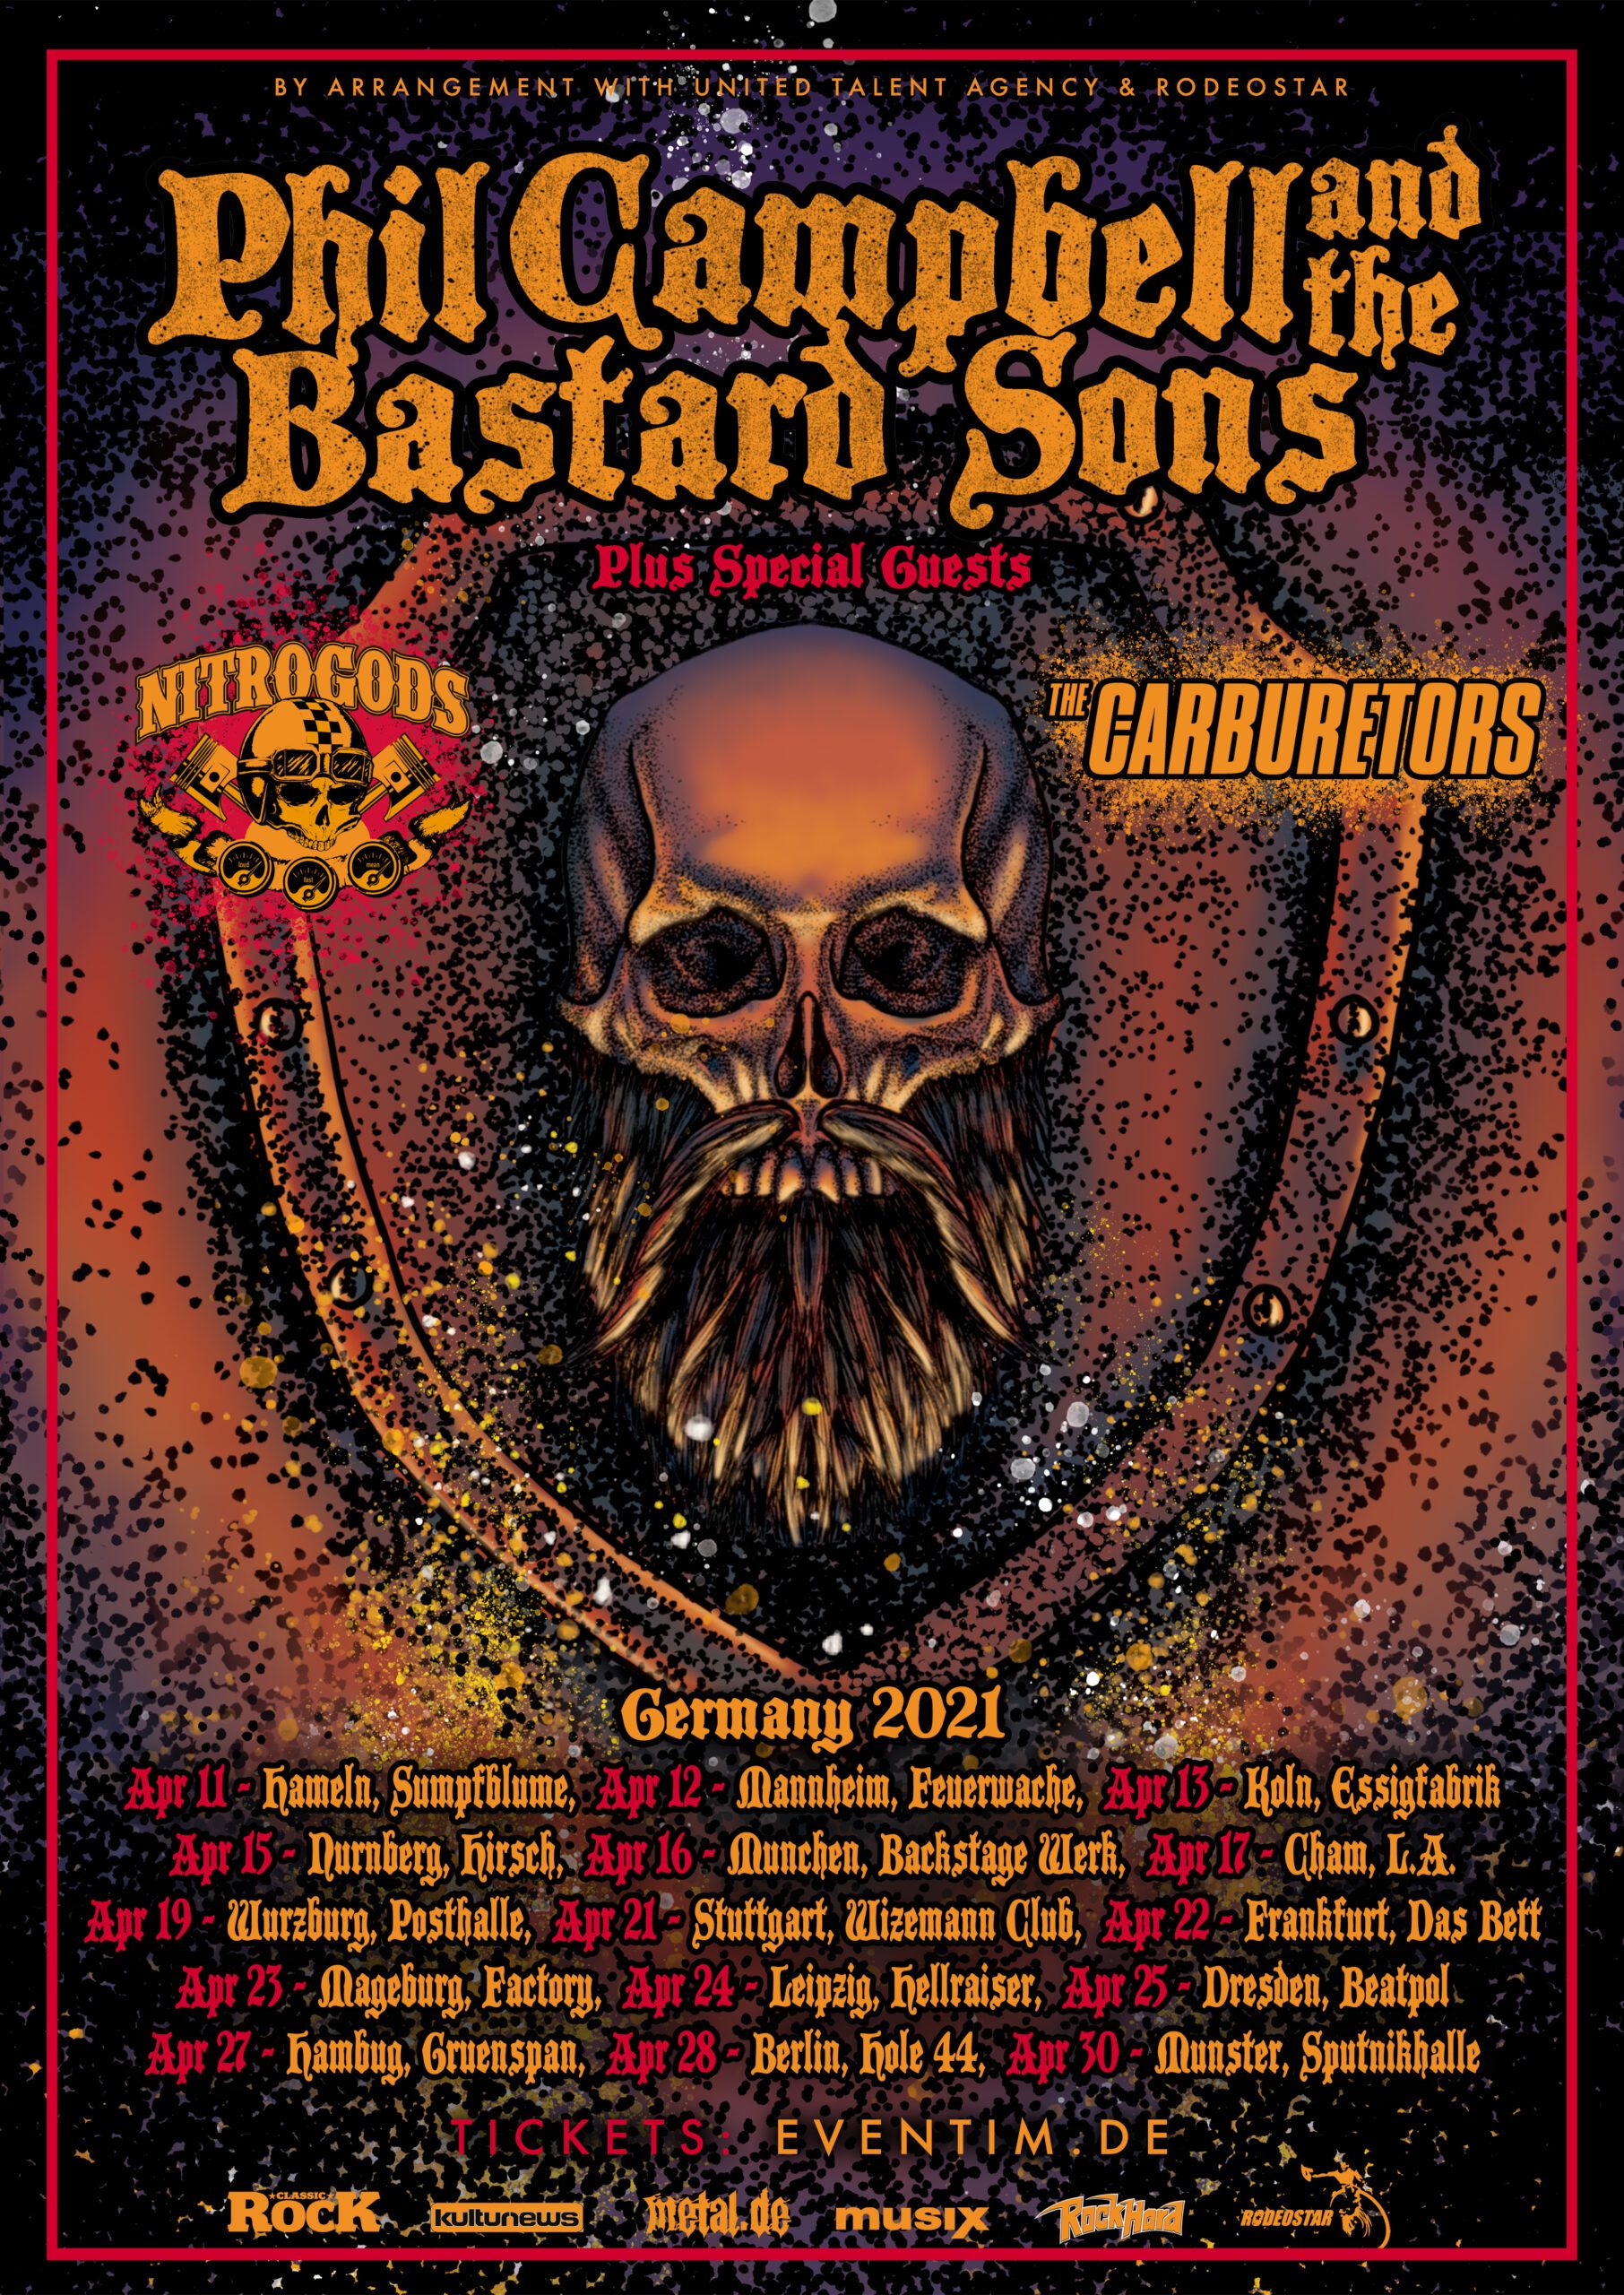 "We're The Bastards"-Tour im April 2021 angekündigt